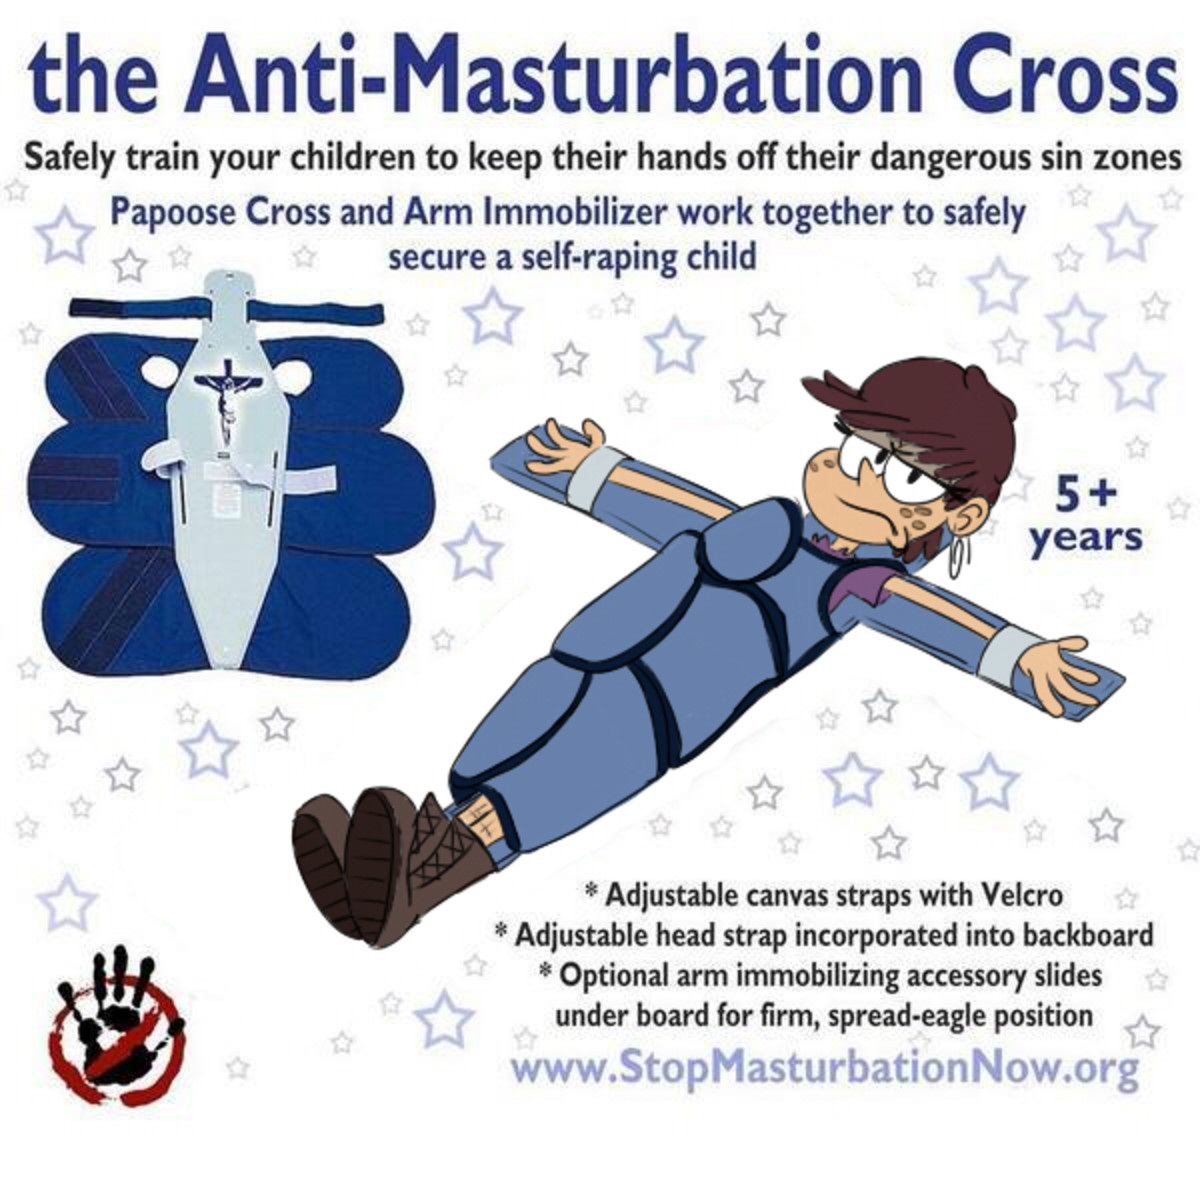 Masturbation remains a grave sin